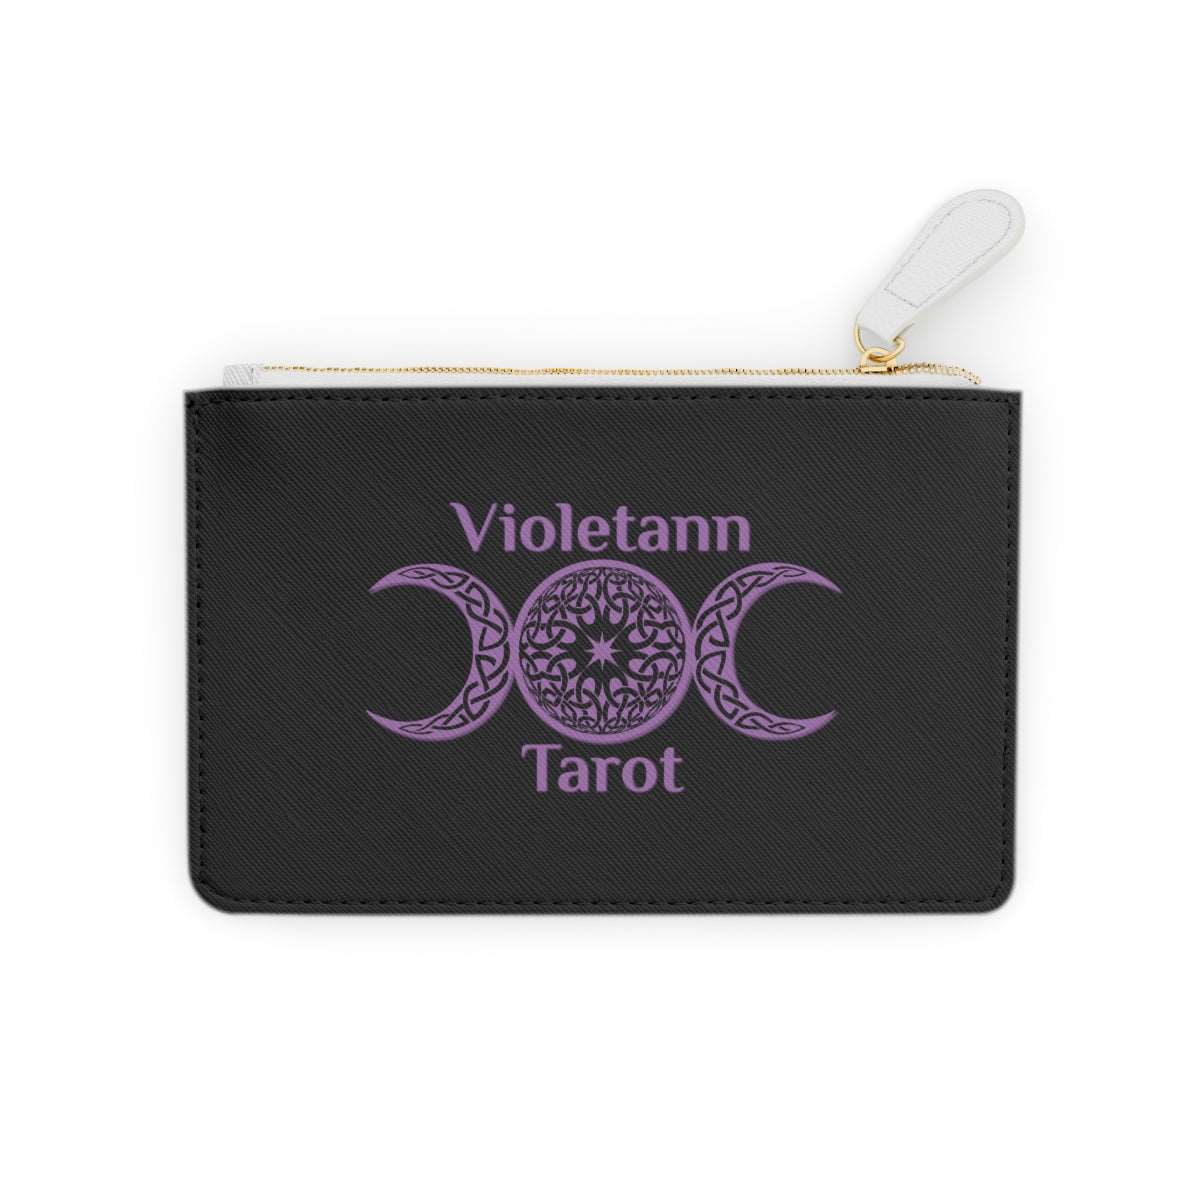 Violetann Tarot Logo -  Black Mini Clutch Bag